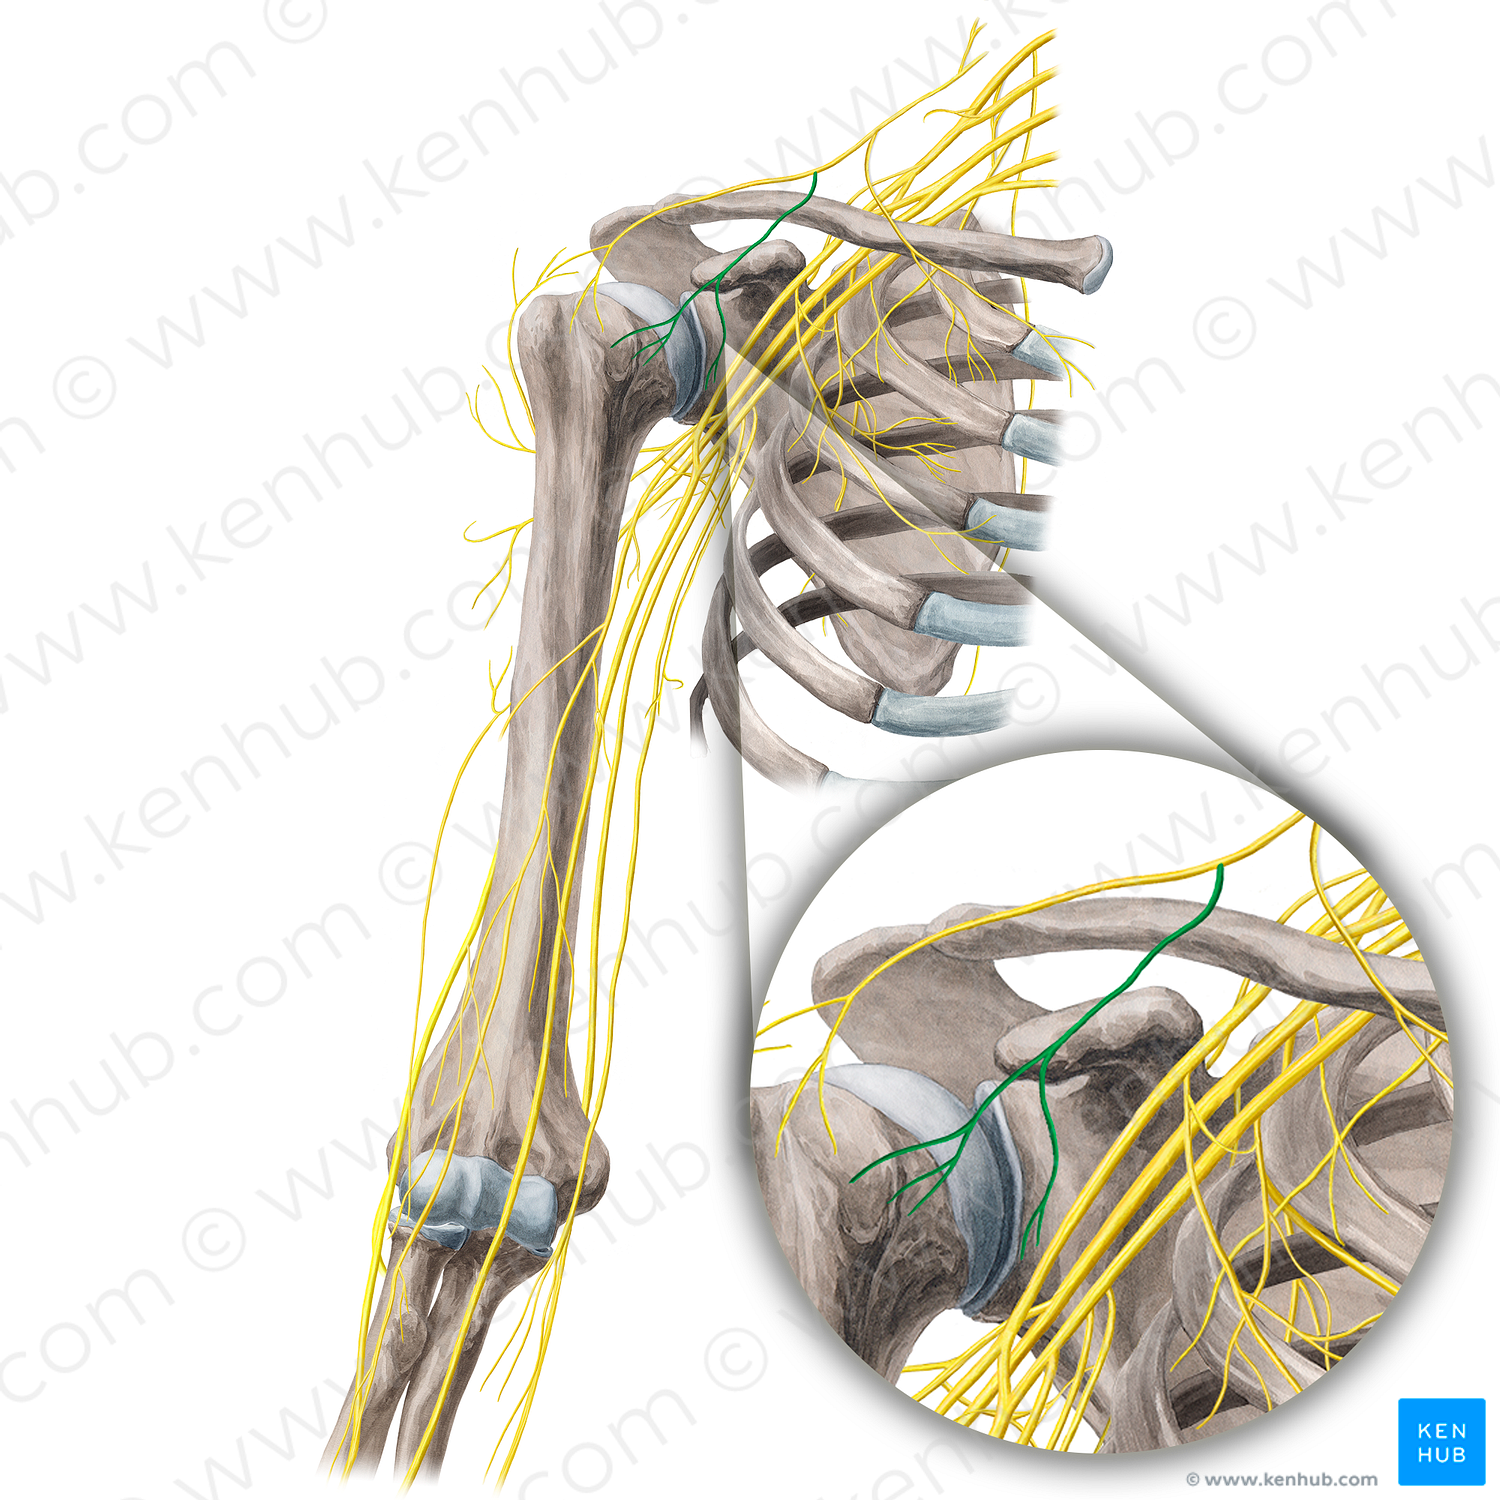 Intermediate supraclavicular nerves (#21681)